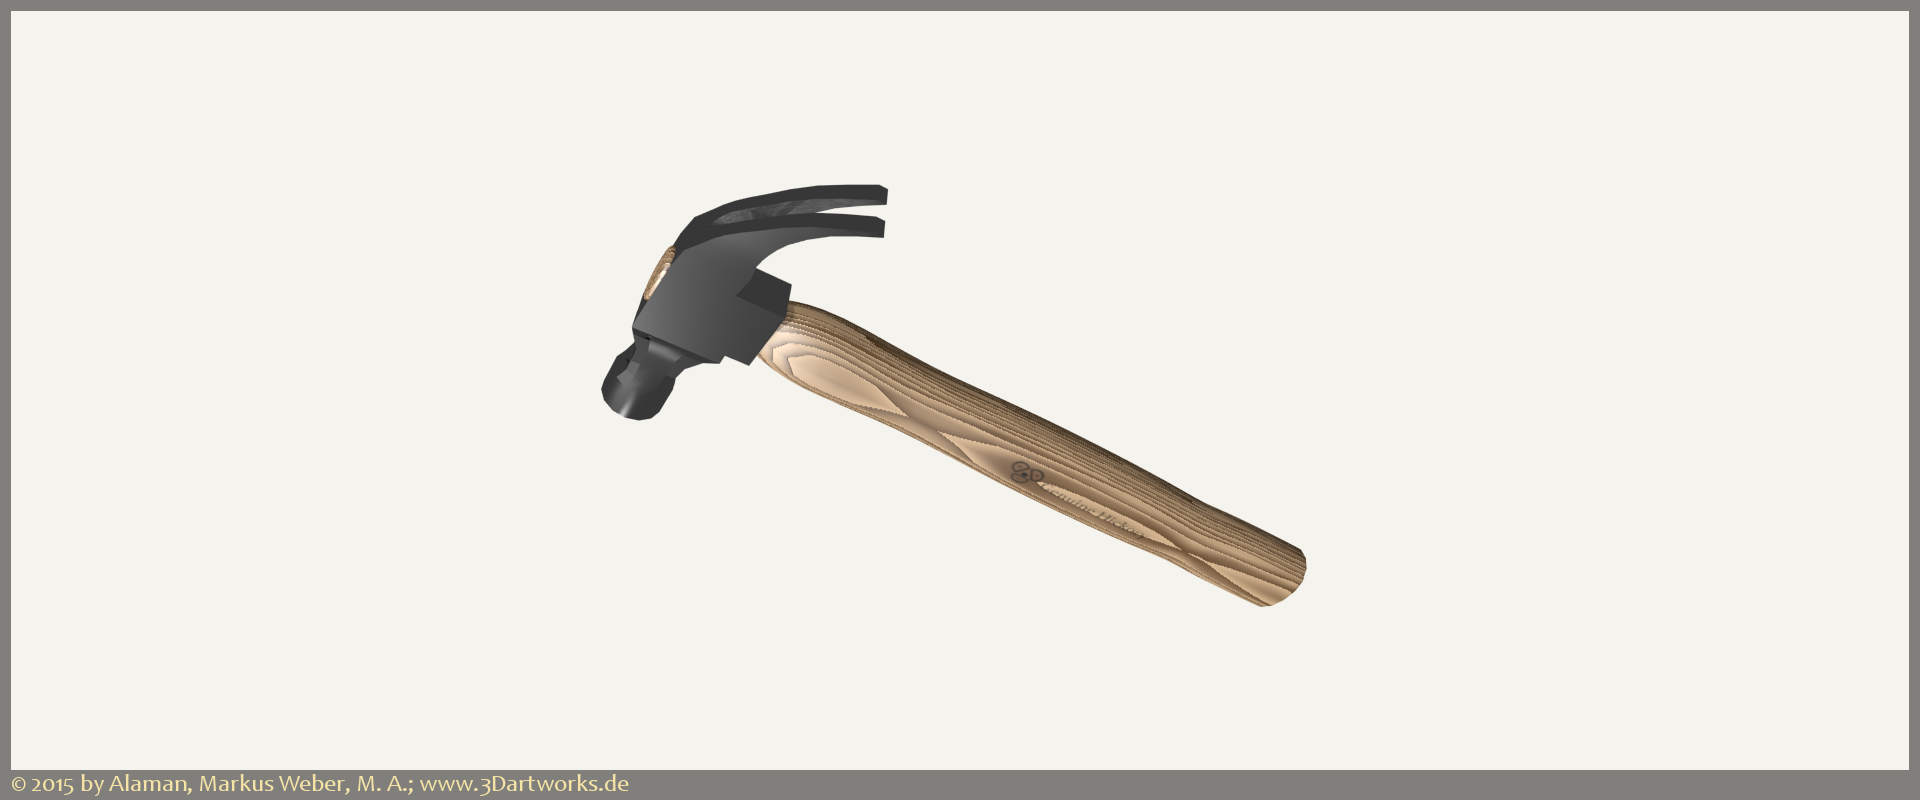 Work in progress at Alaman 3D Artworks: product visualization, claw hammer aka carpenter hammer.